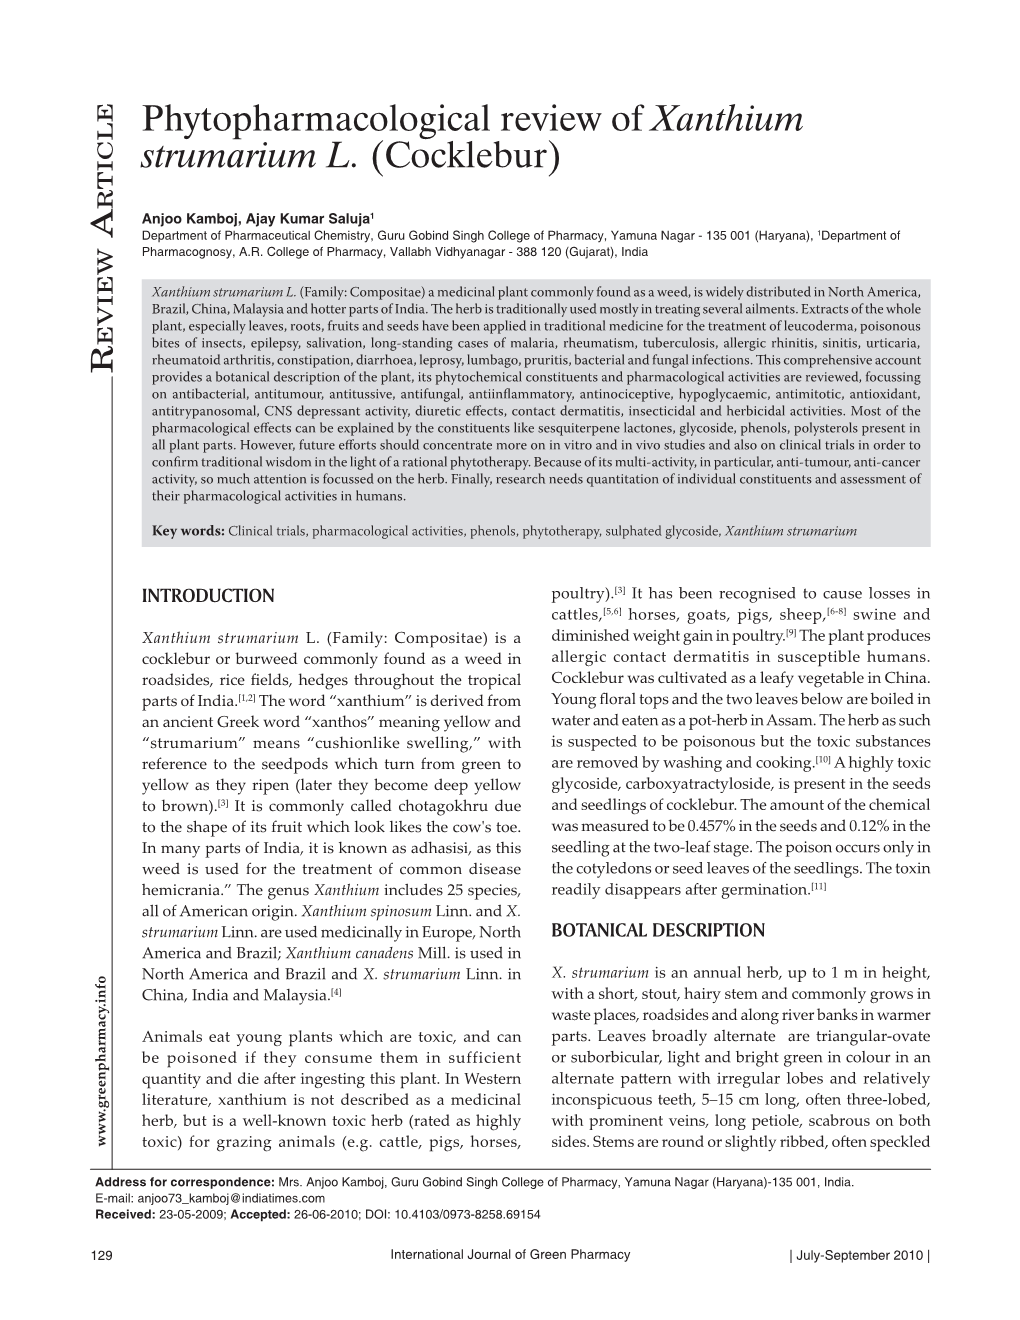 Phytopharmacological Review of Xanthium Strumarium L. (Cocklebur)